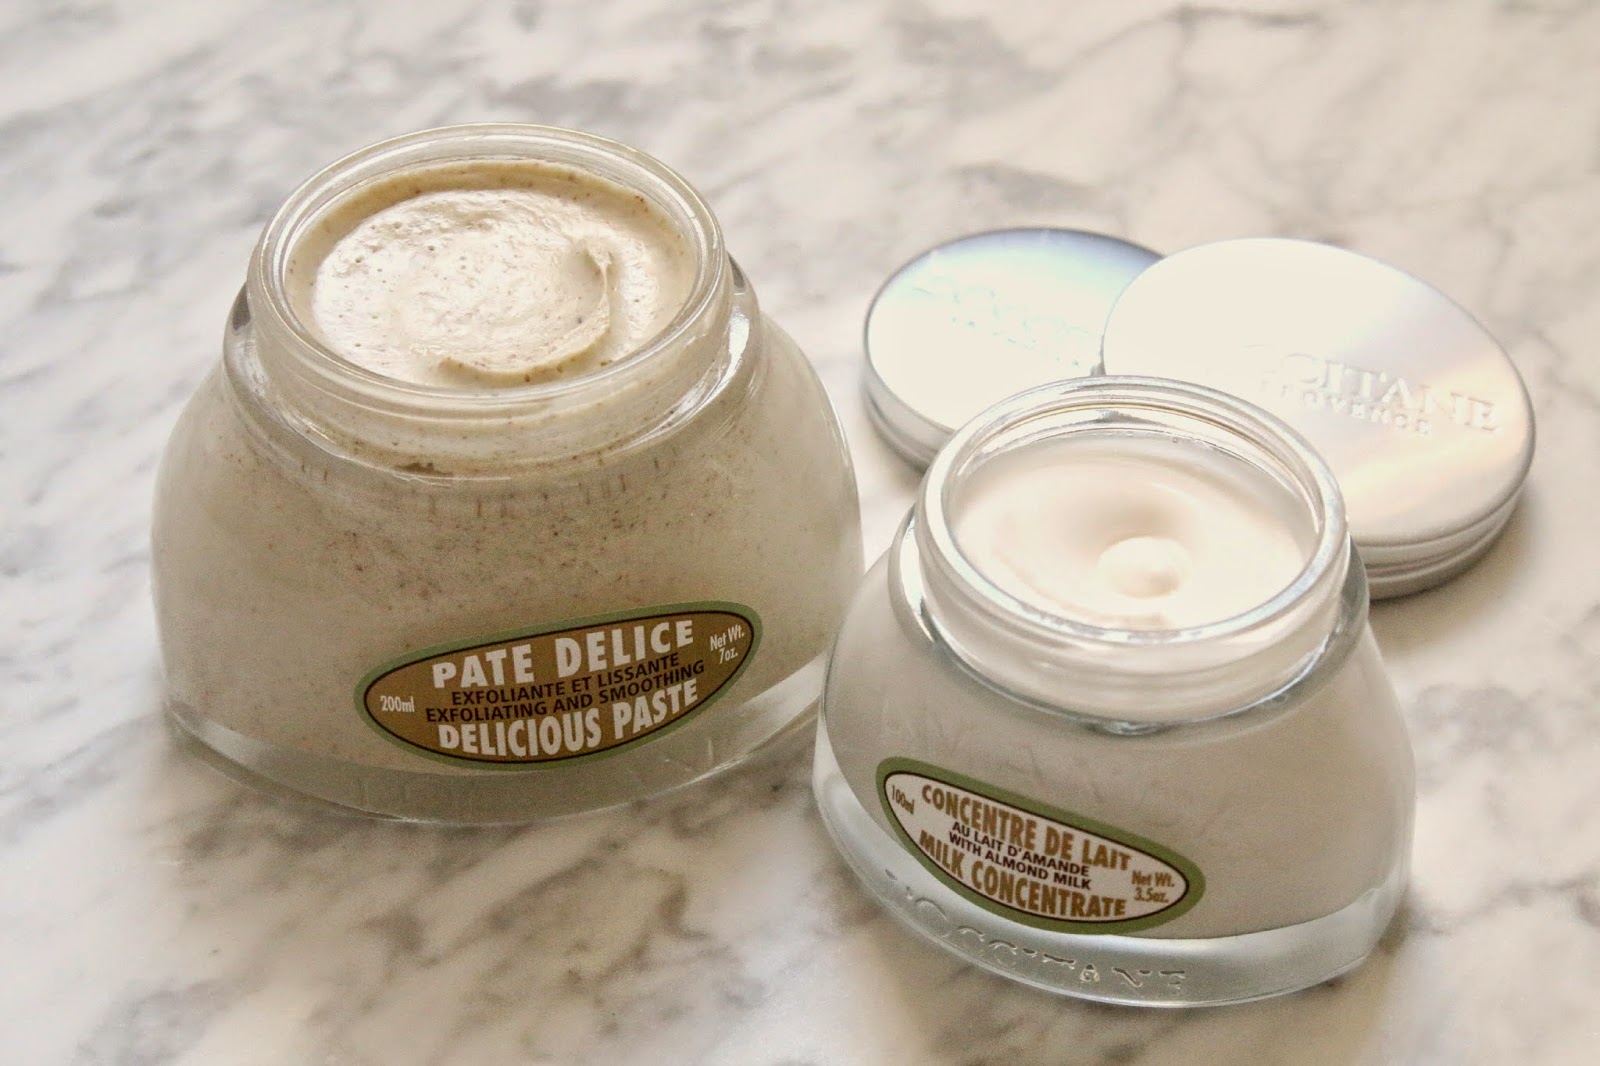 L'Occitane Almond Delicious Paste and Milk Concentrate review